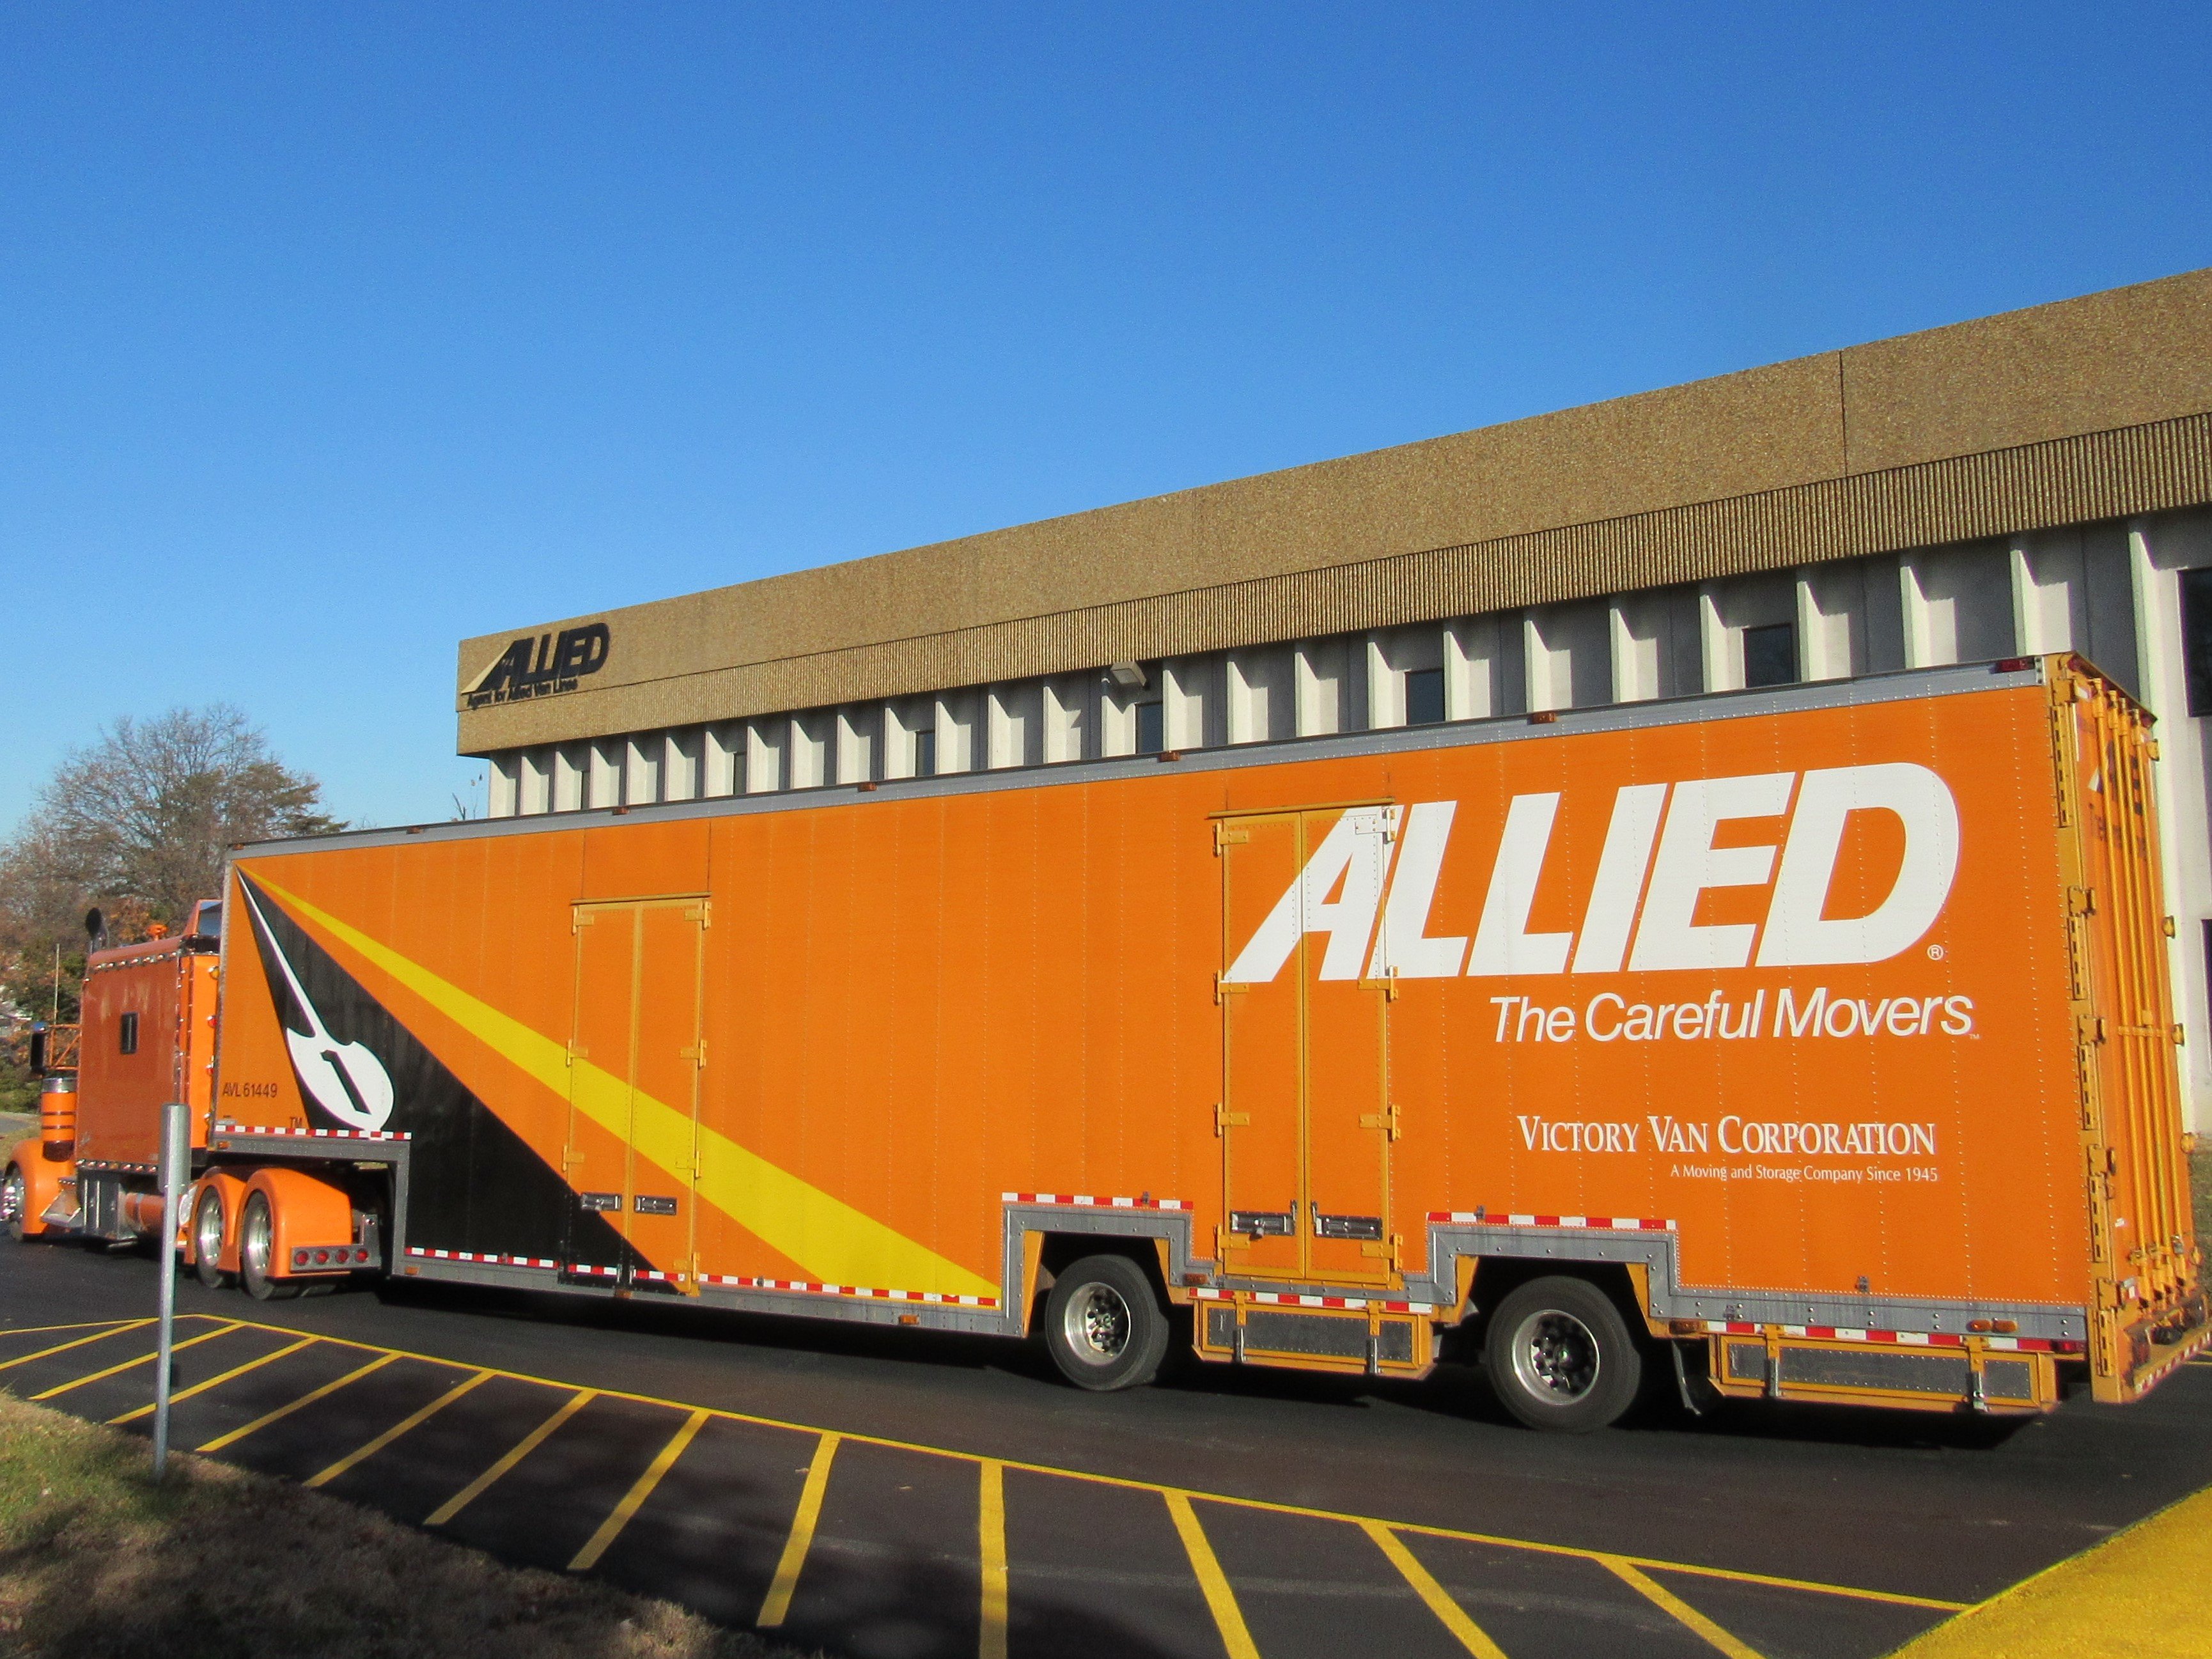 Moving Companies in Alexandria, VA | Victory Van Corporation